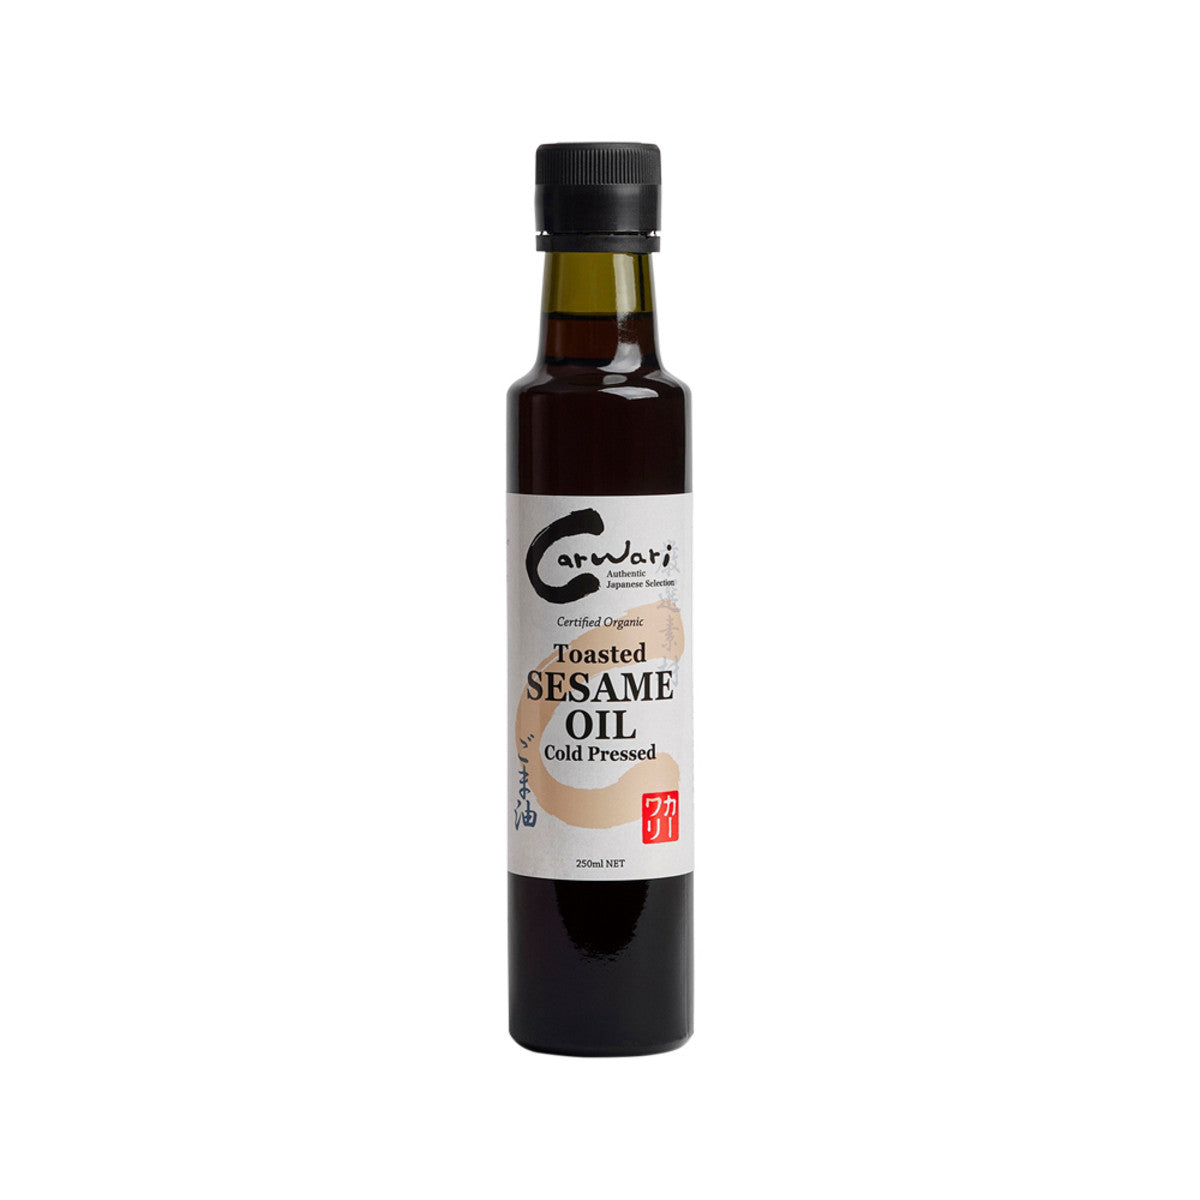 Carwari Toasted White Sesame Oil 250ml, Certified Organic